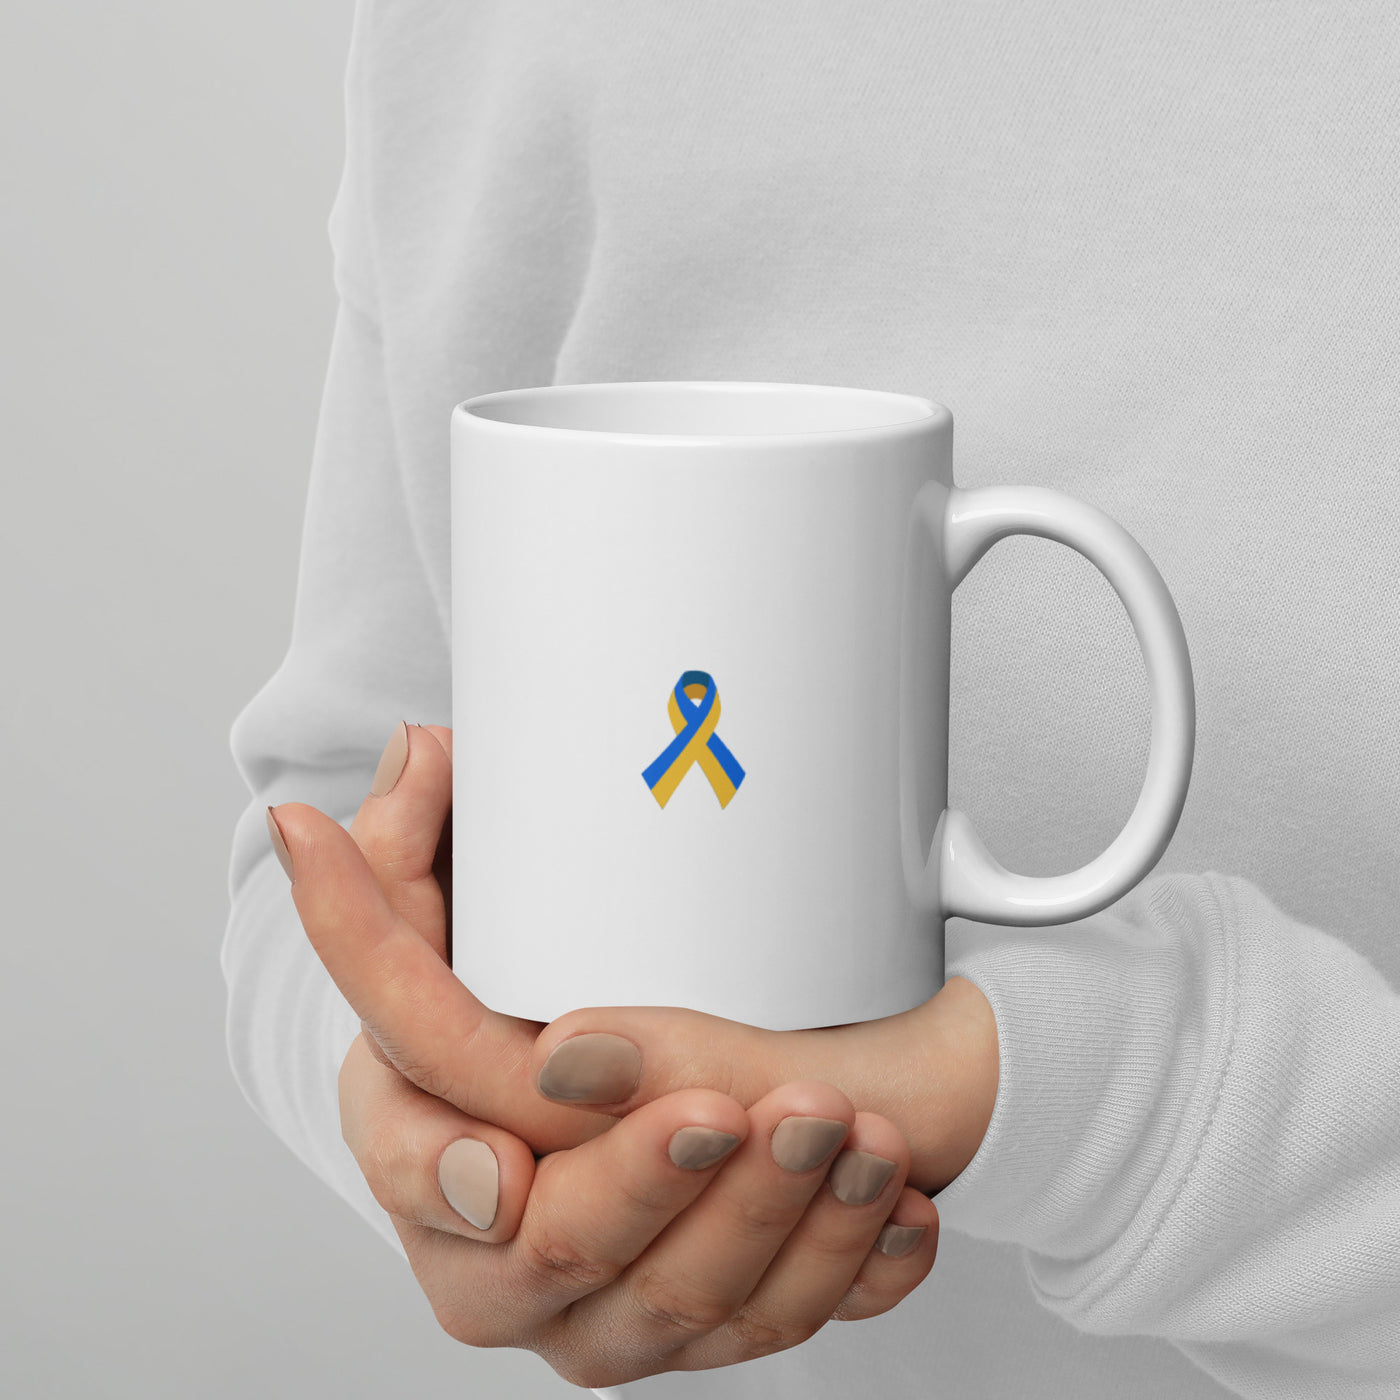 Paying Tribute to the Ukrainian Courage Mug